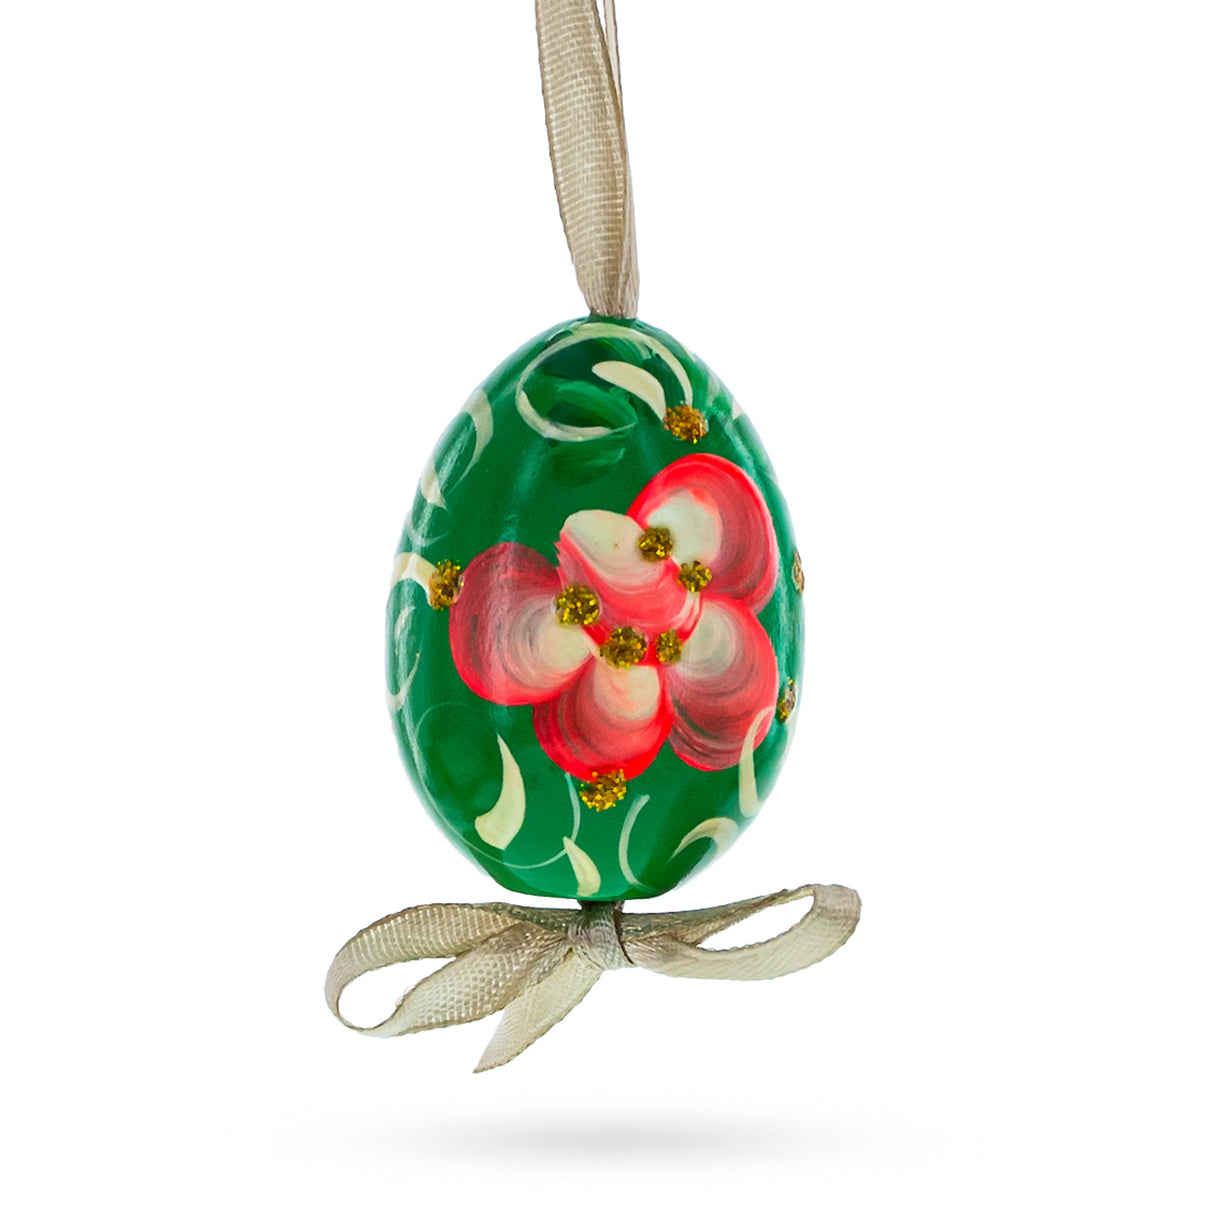 Shop Flowery Painting Miniatured Multicolored Wooden Easter Egg Ornaments. Buy Multi color Wood Easter Eggs Ornaments Wooden for Sale by Online Gift Shop BestPysanky